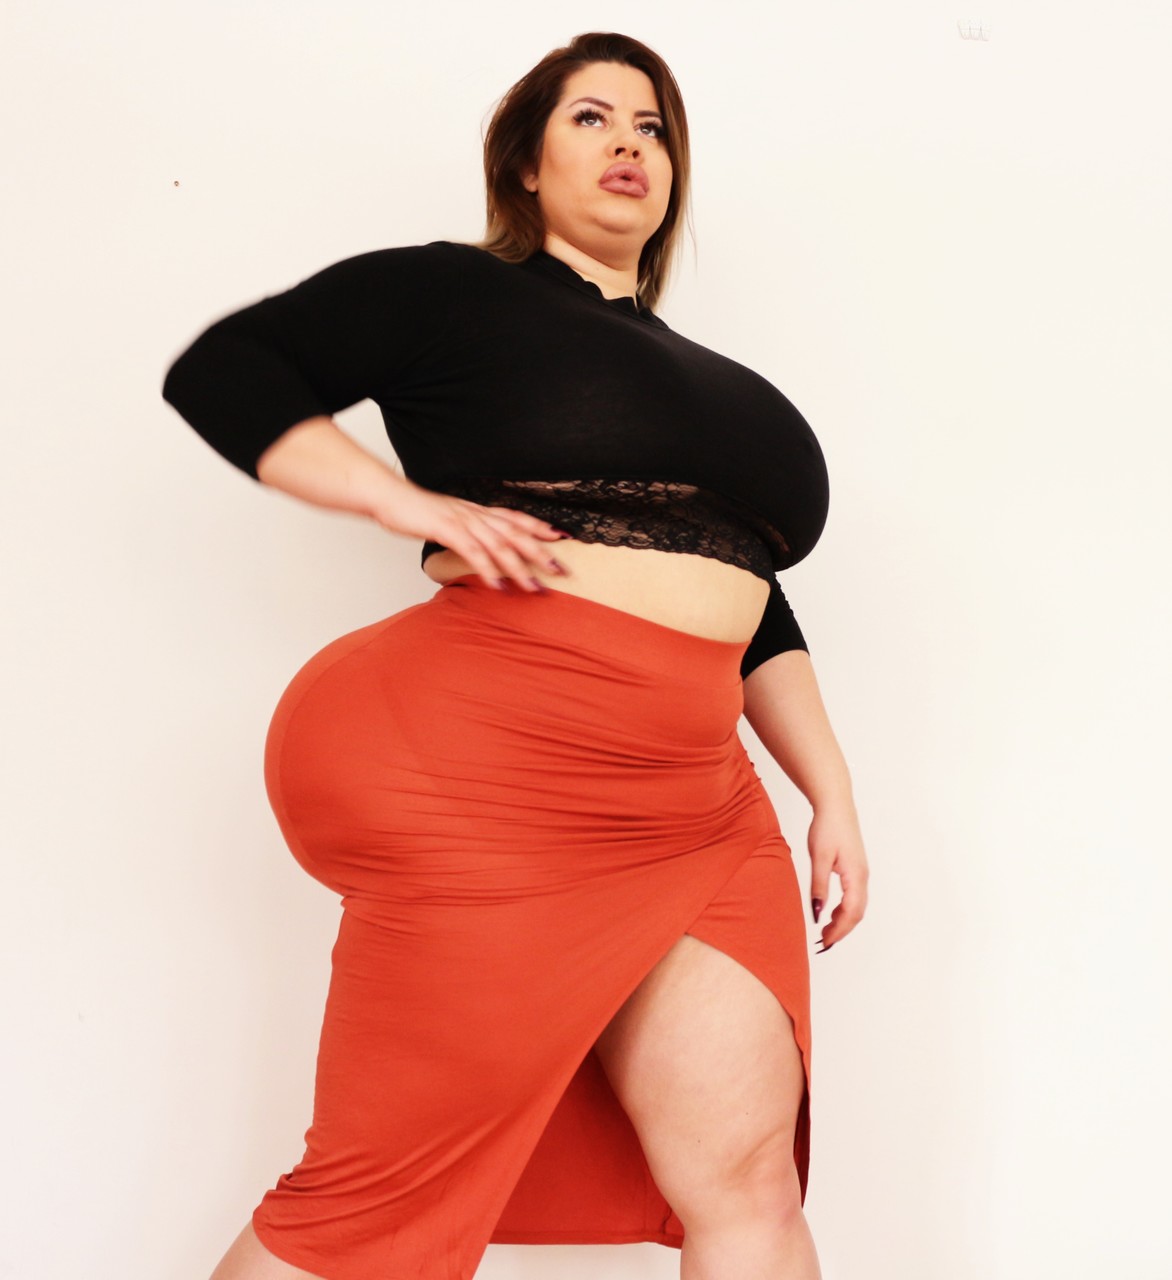 Stunning MILF fatty Natasha Crown flaunting her very big ass in a tight skirt Porno-Foto #423816654 | Natasha Crown Pics, Natasha Crown, BBW, Mobiler Porno